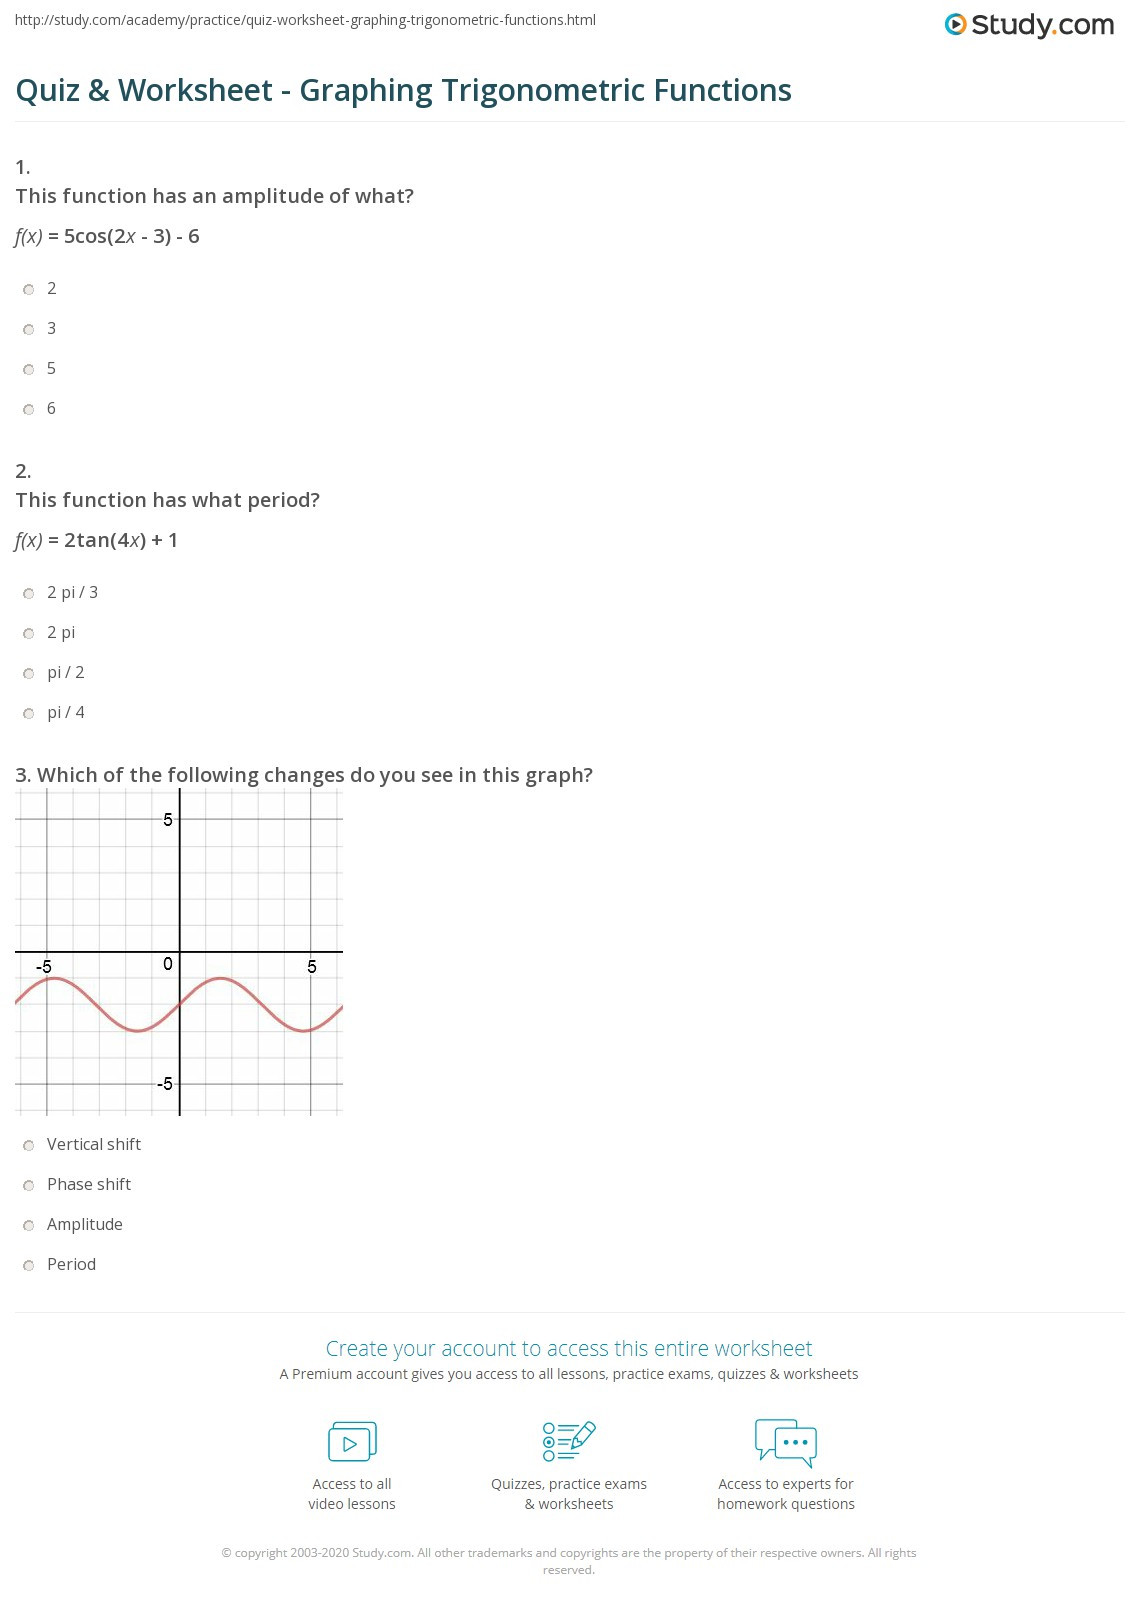 Graphing Trig Functions Practice Worksheet Graphing Trig Functions Practice Worksheet